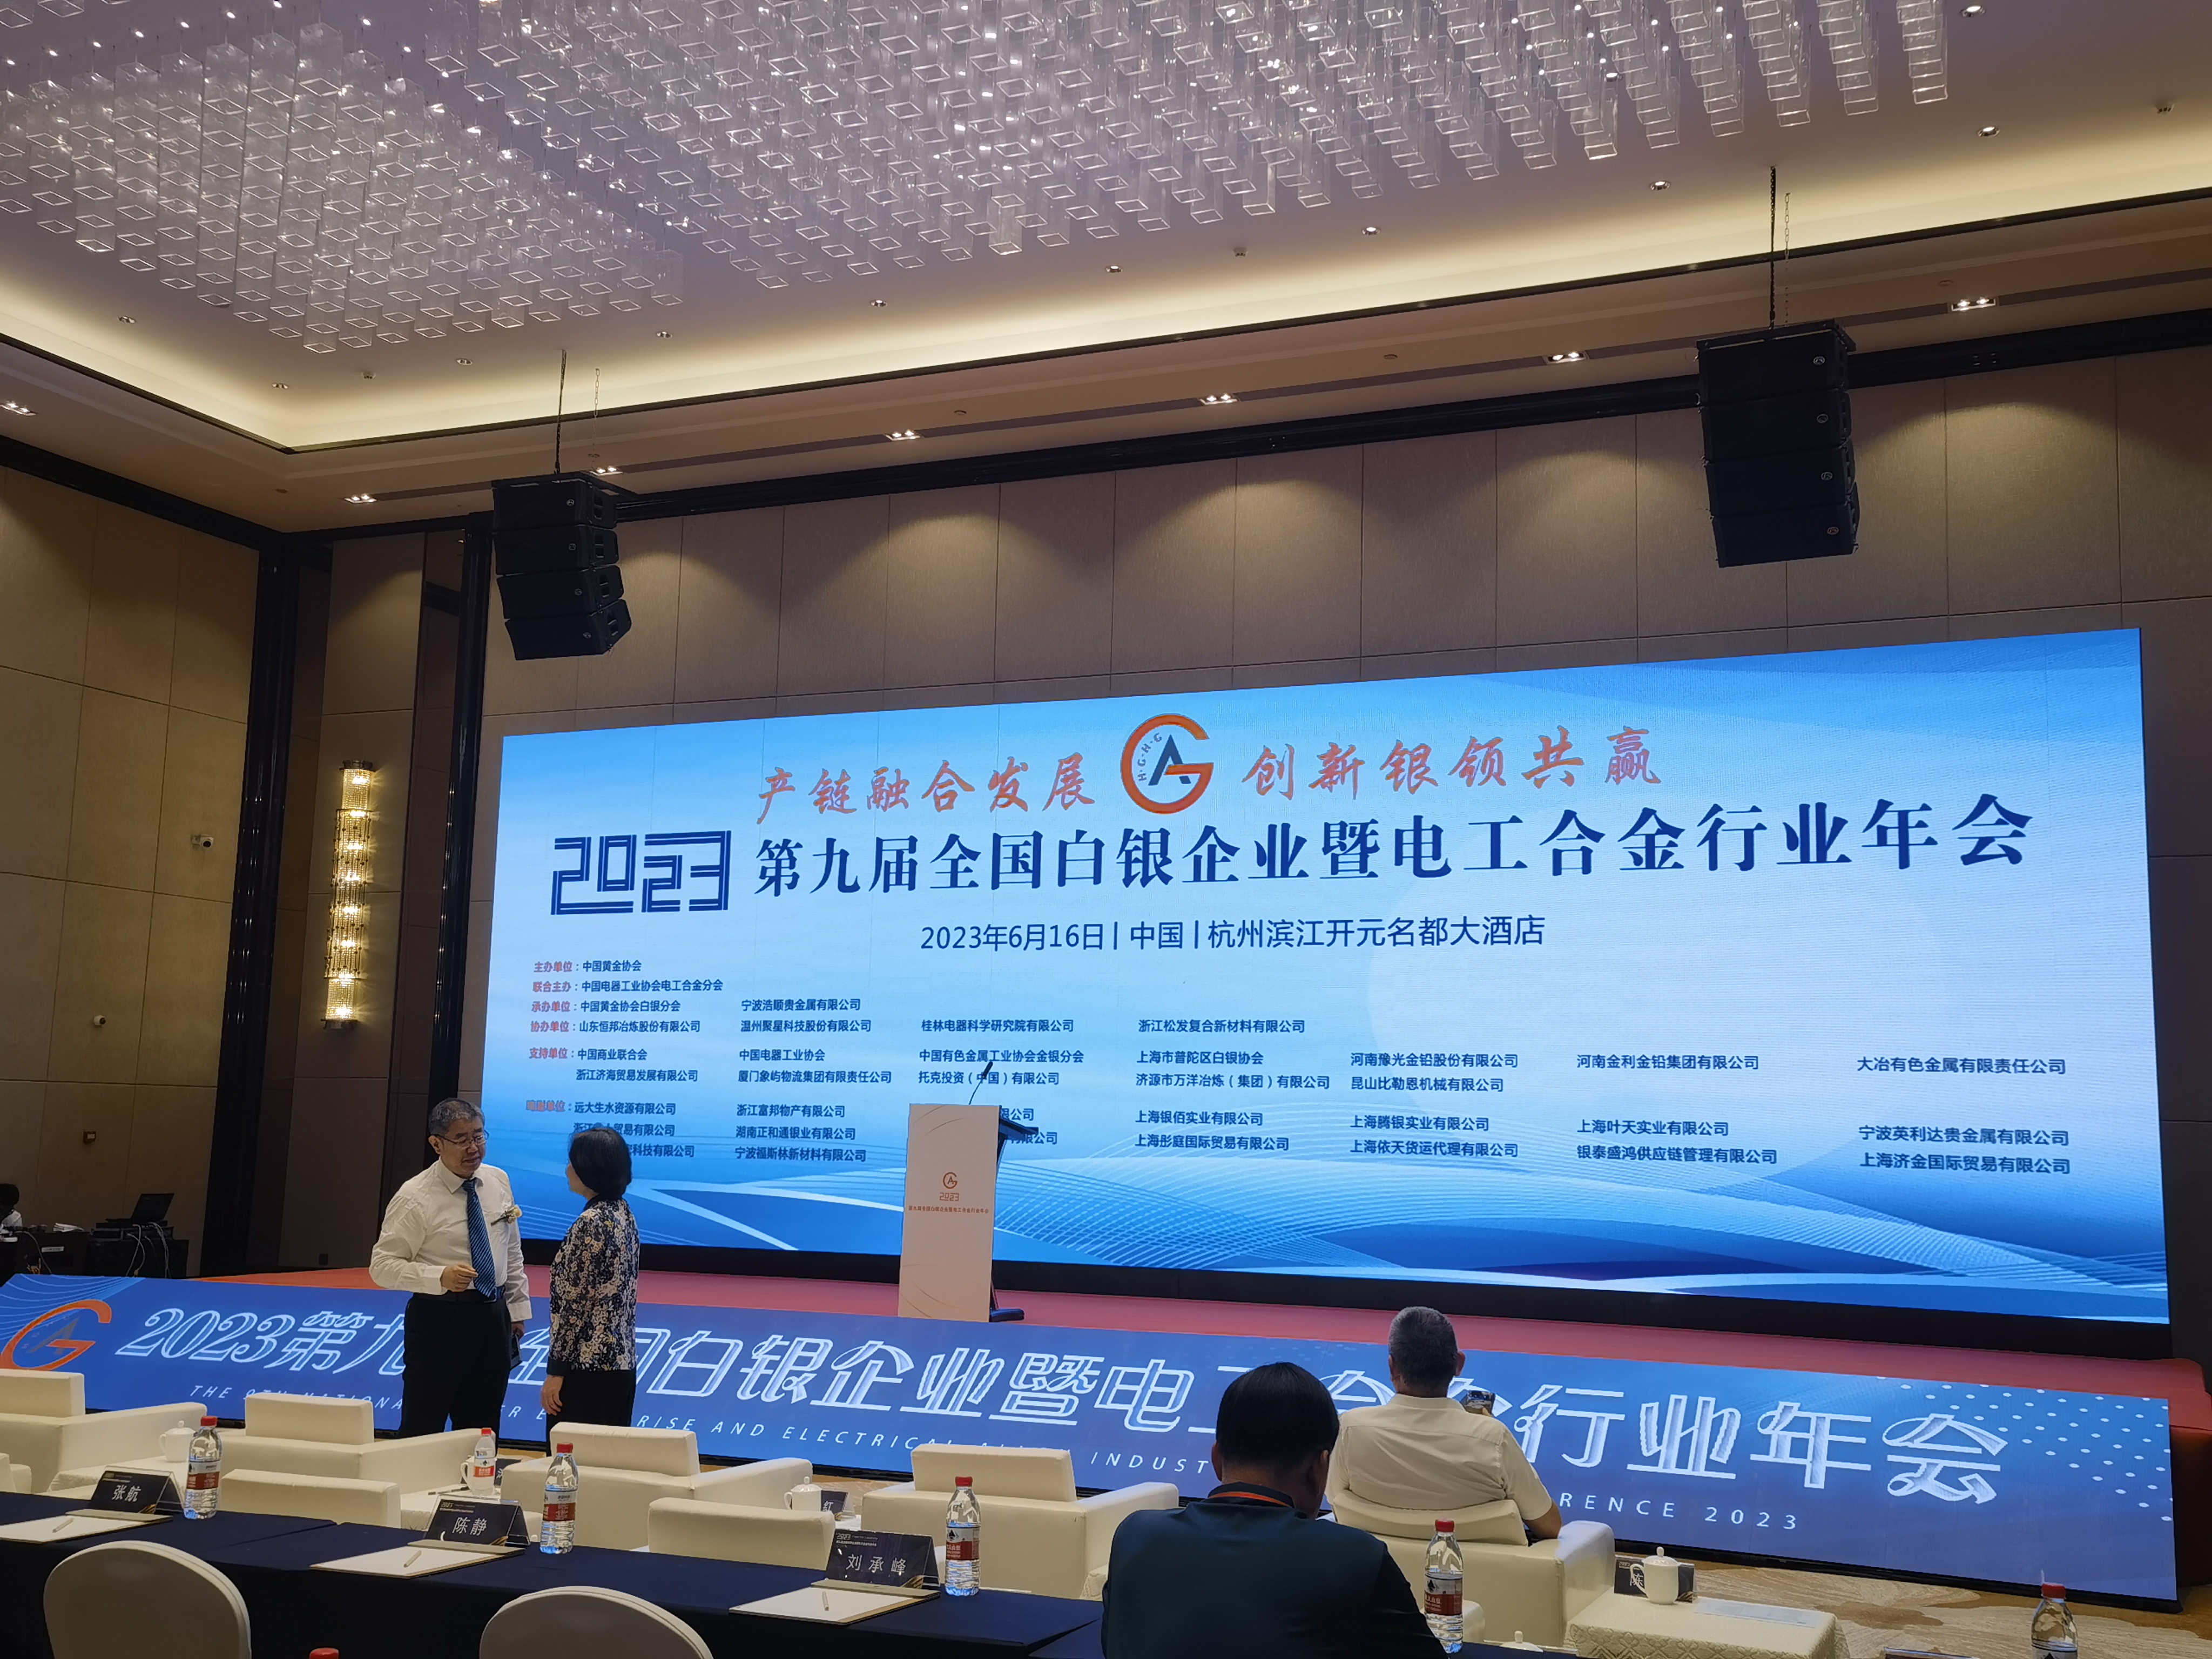 Den 9. Kinas sølv- og elektriske legeringsindustrikonference